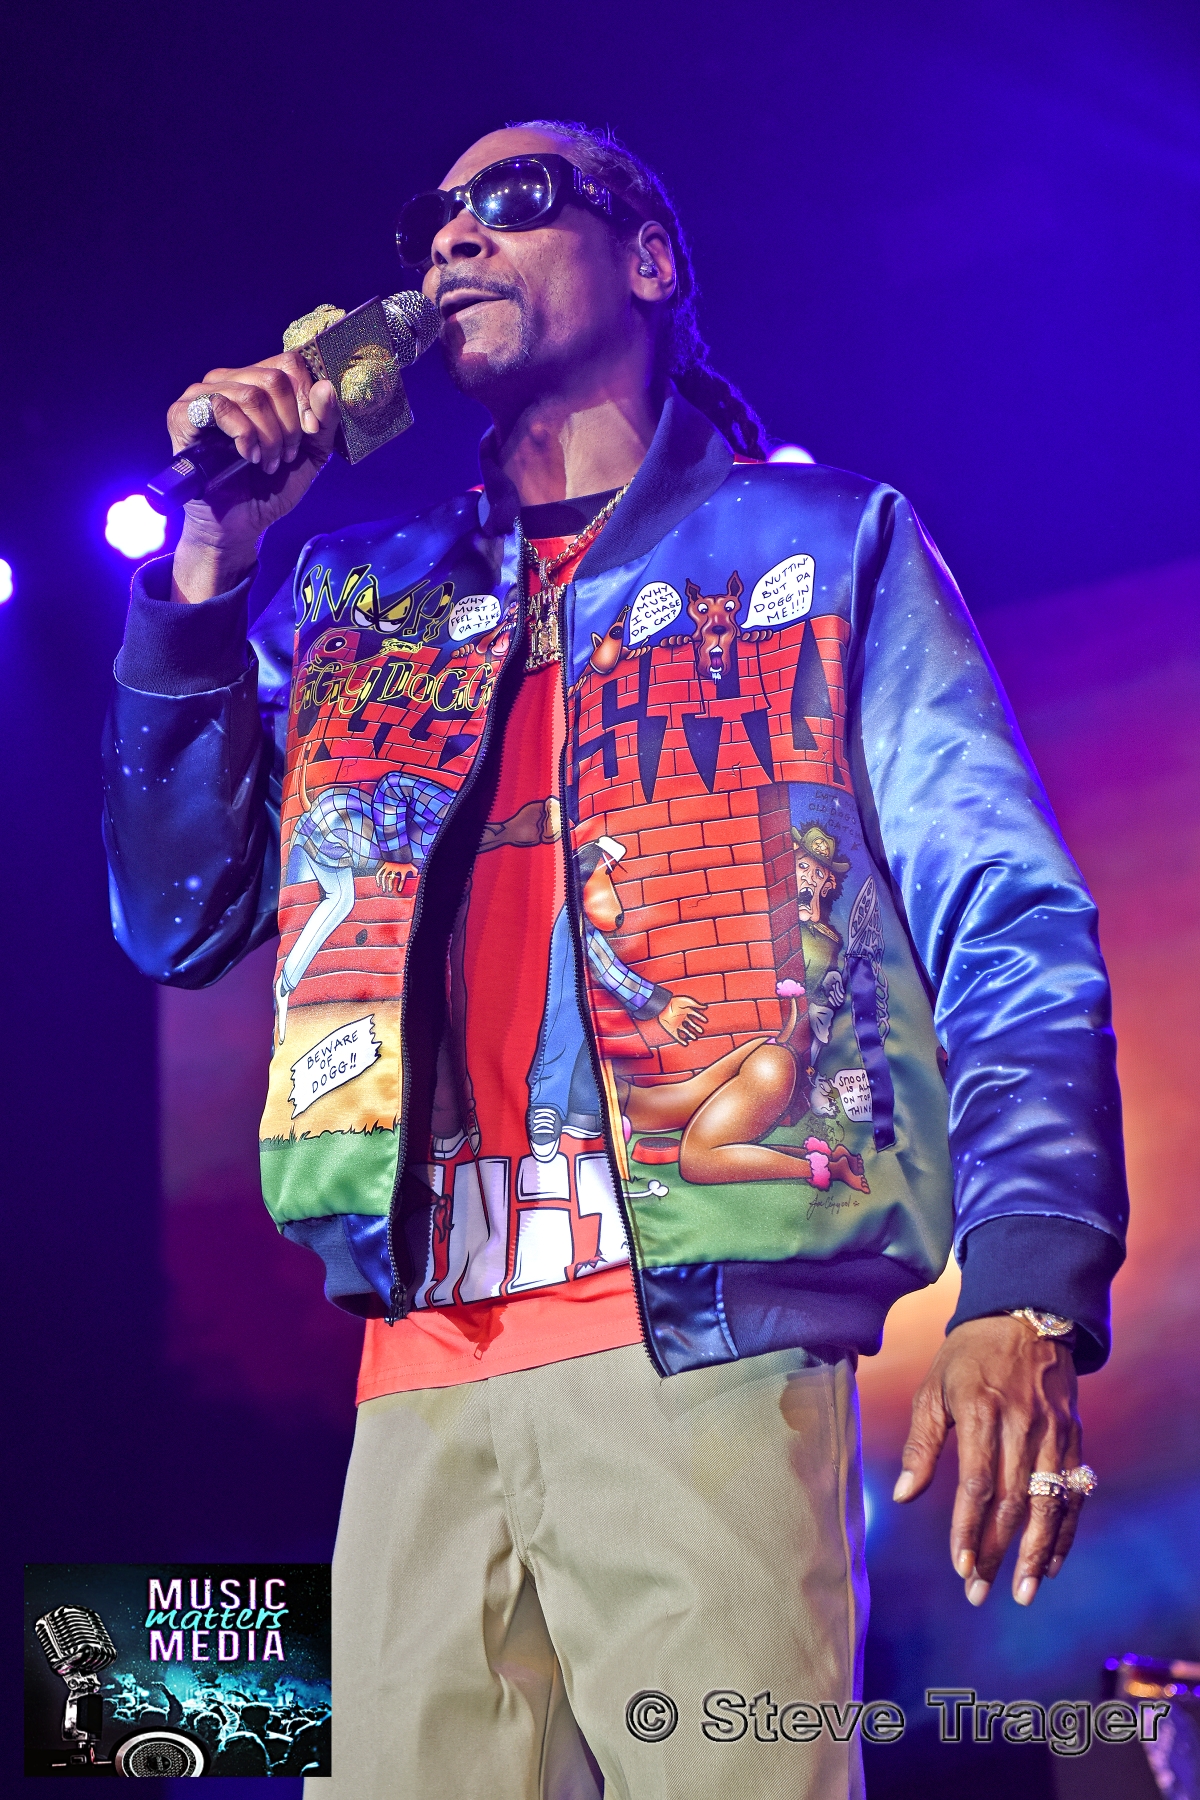 Music Matters Media Snoop Dogg ‘I Wanna Thank Me’ Tour 2020